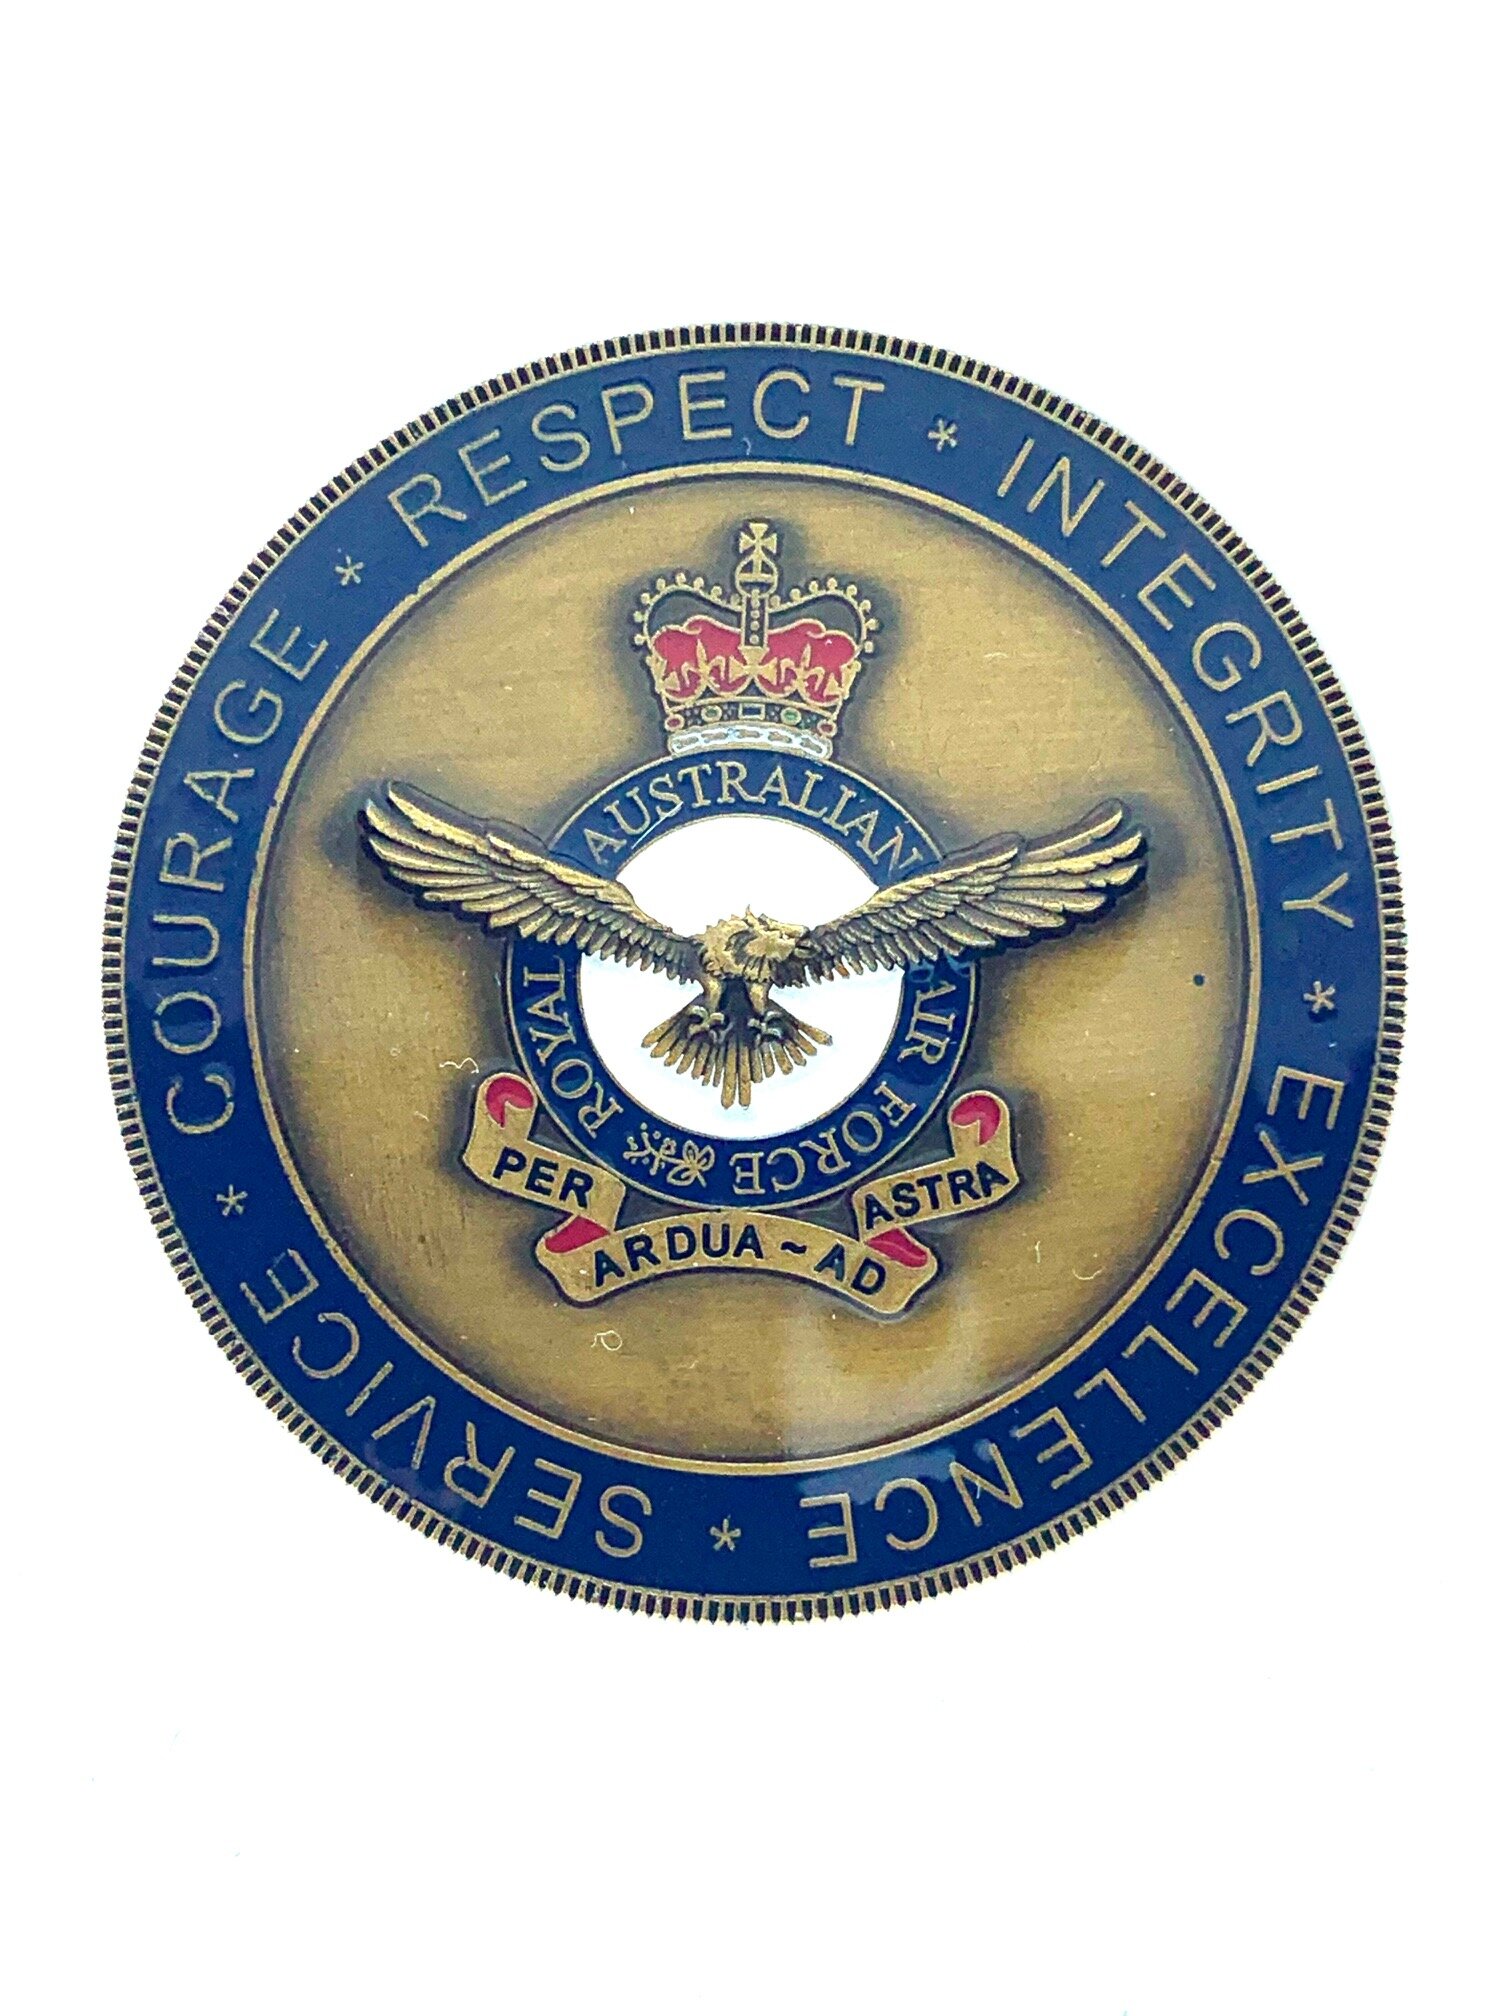 23 Squadron - Commanding Officer - Back